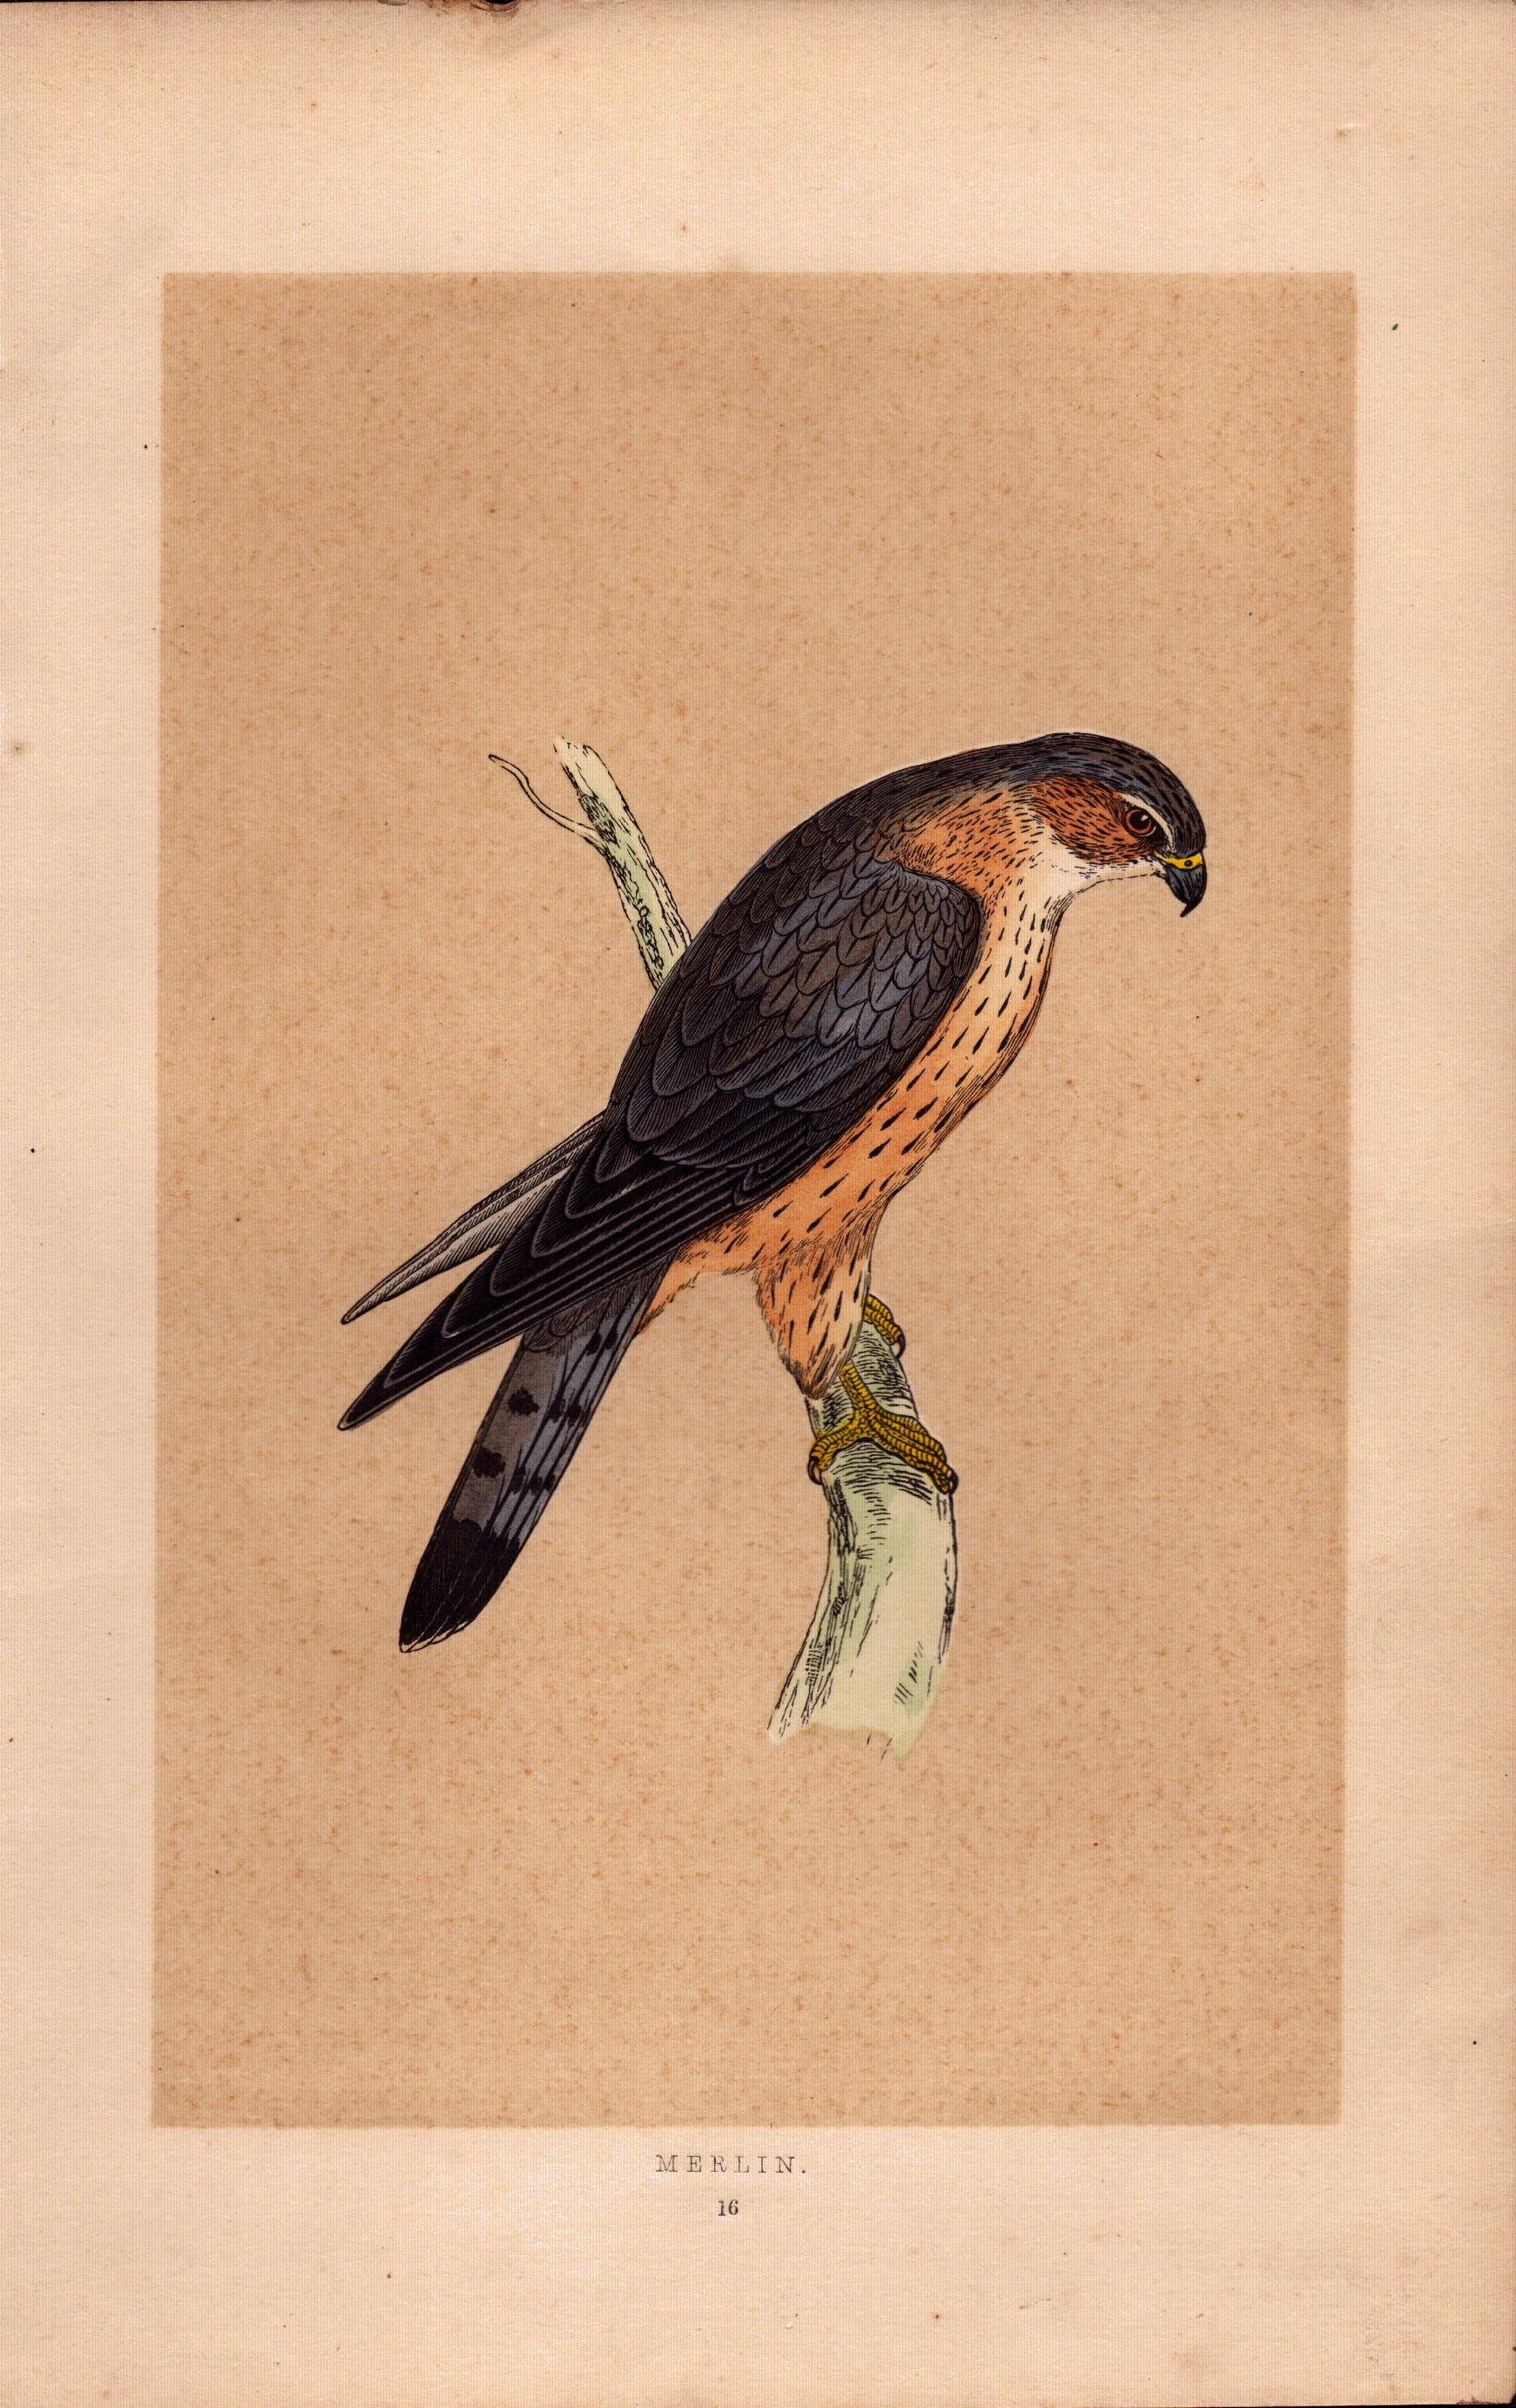 Merlin Rev Morris Antique History of British Birds Engraving.